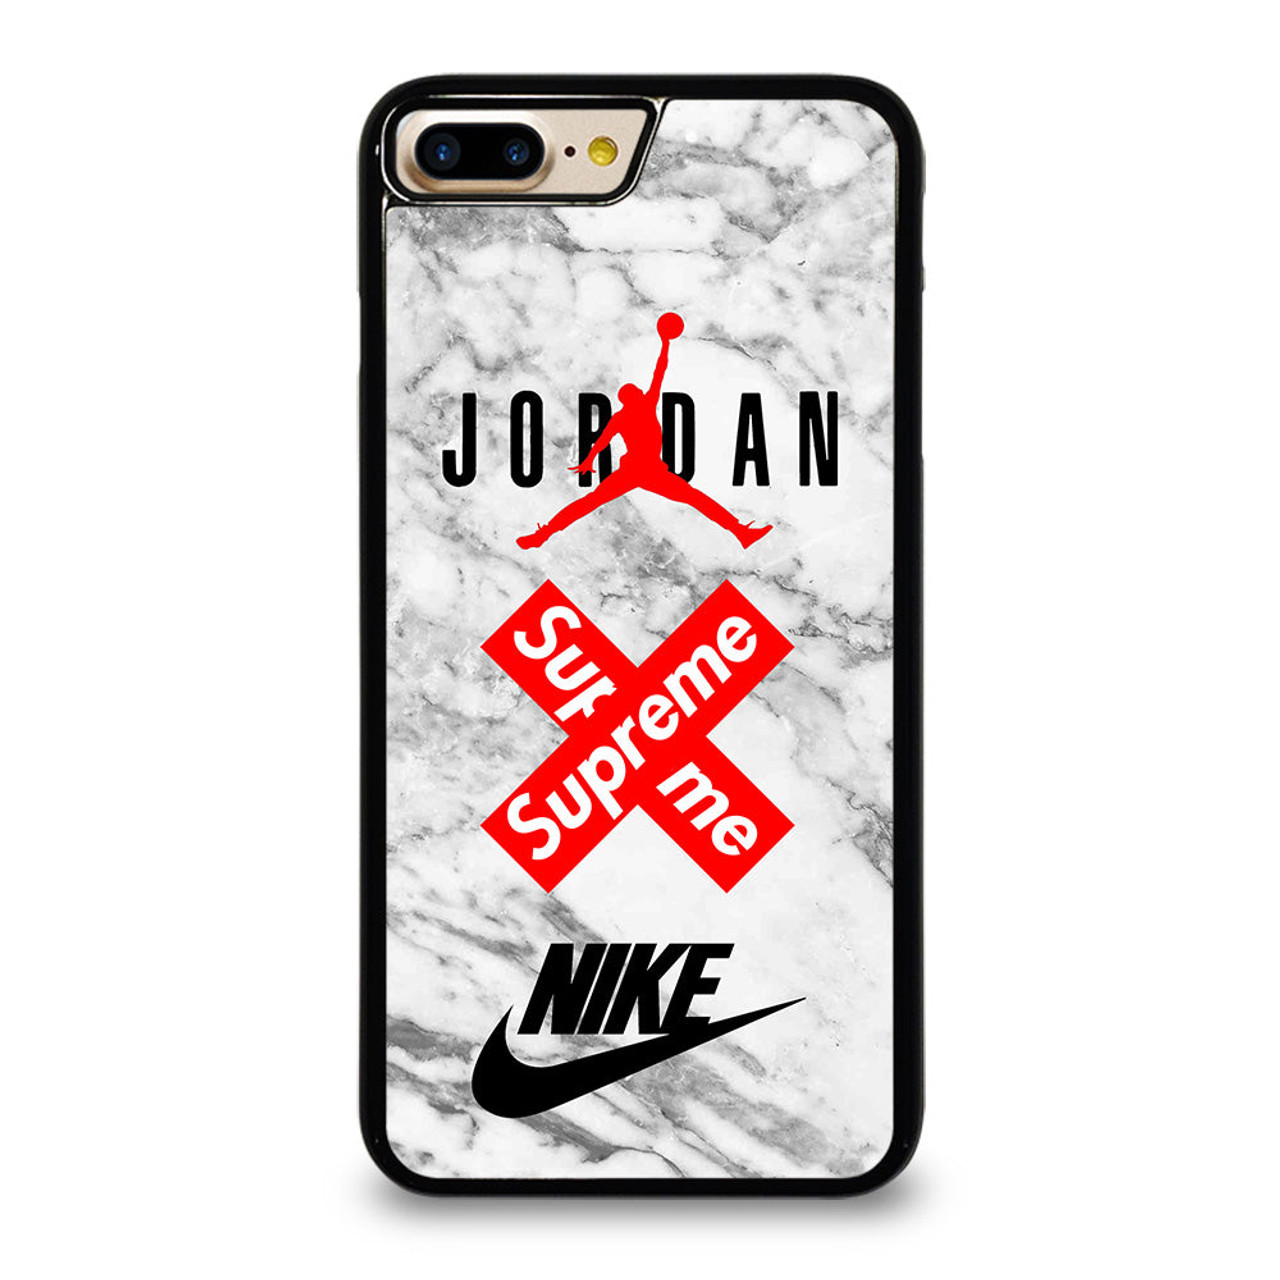 AIR JORDAN MARBLE SUPREME NIKE iPhone 7 / 8 Plus Case Cover